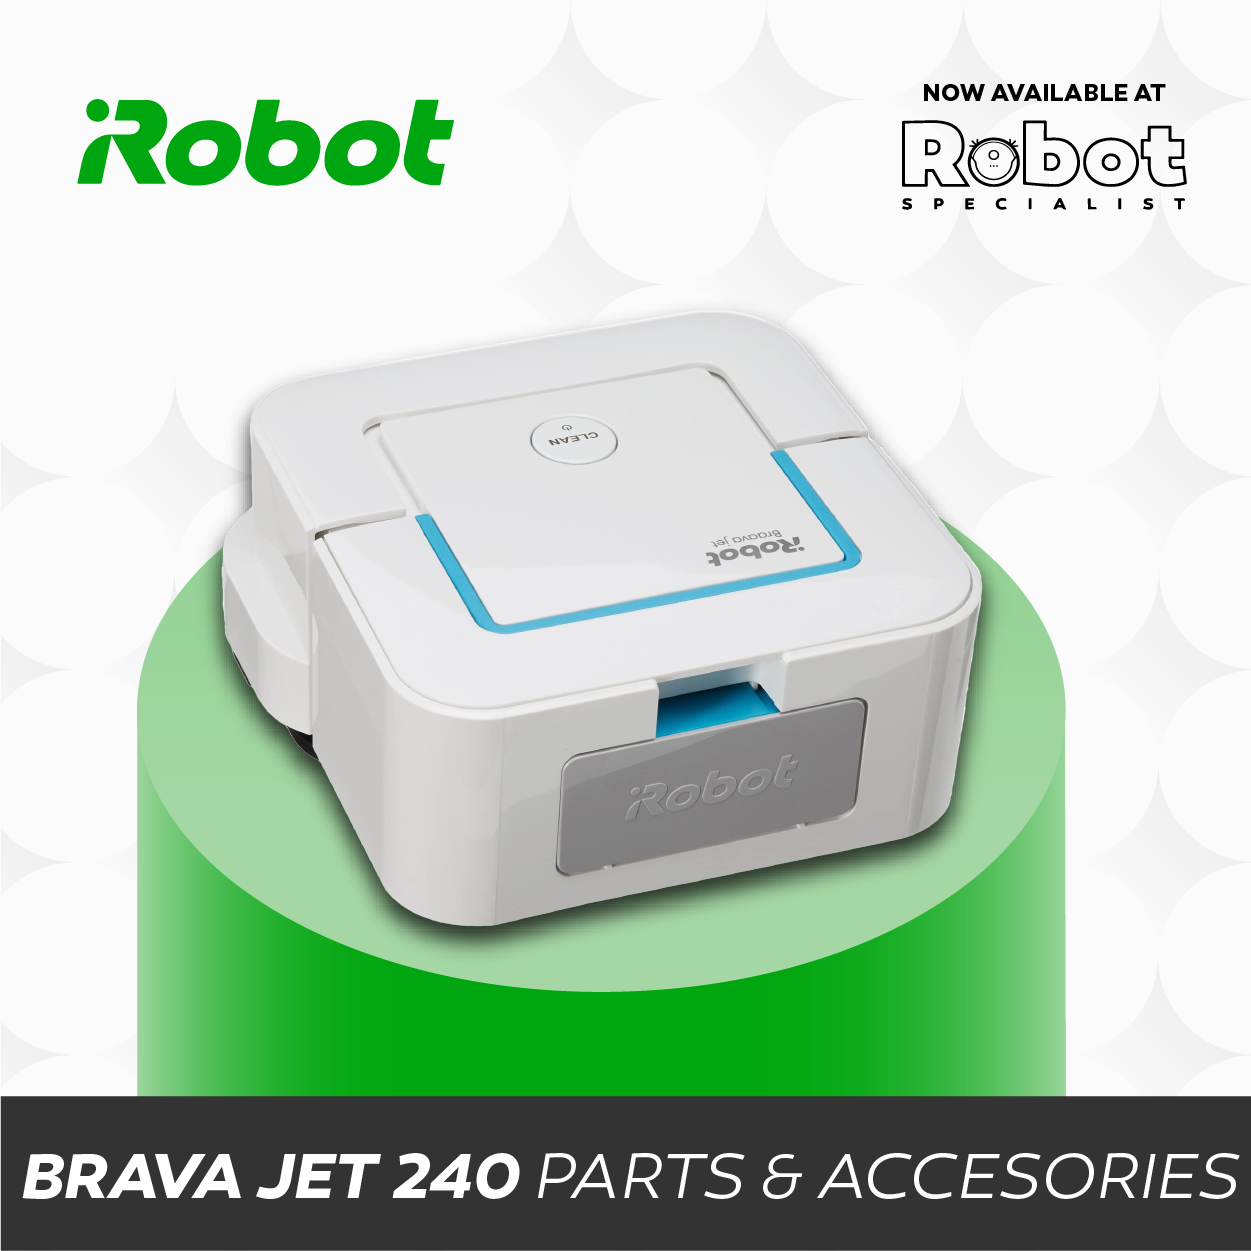 Expert's Take on Braava 240 | Robot Specialist